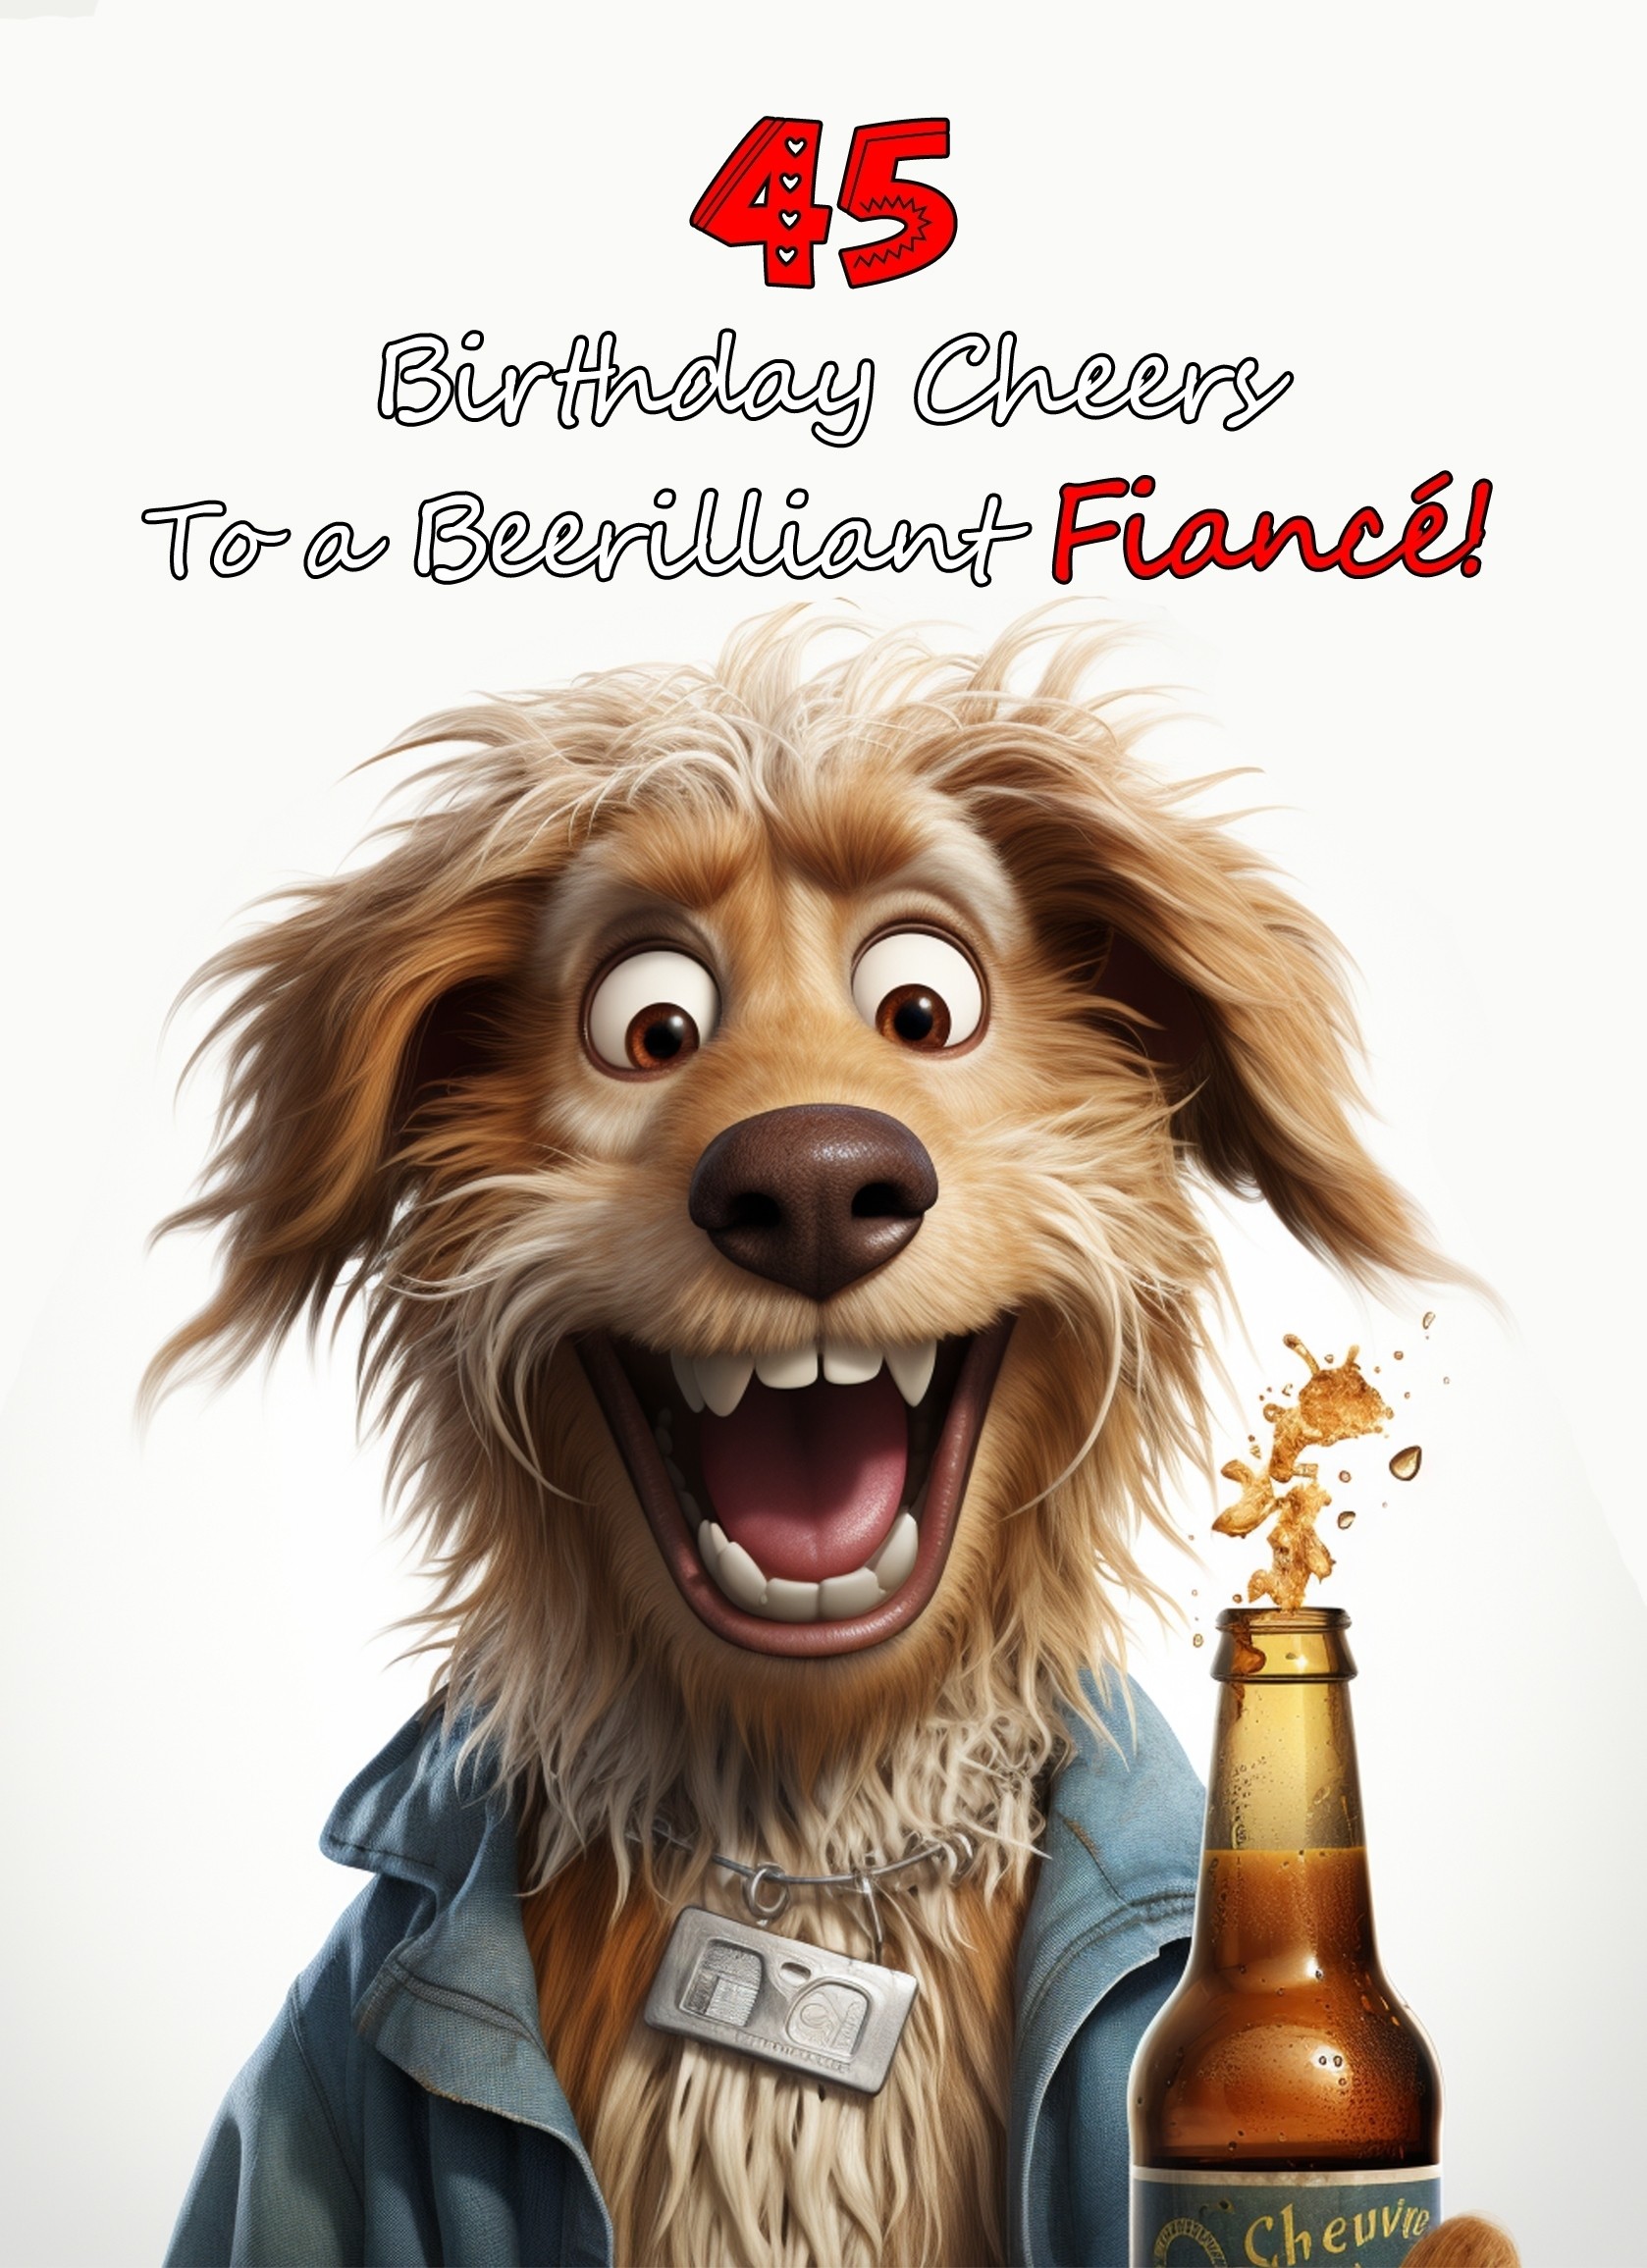 Fiance 45th Birthday Card (Funny Beerilliant Birthday Cheers)